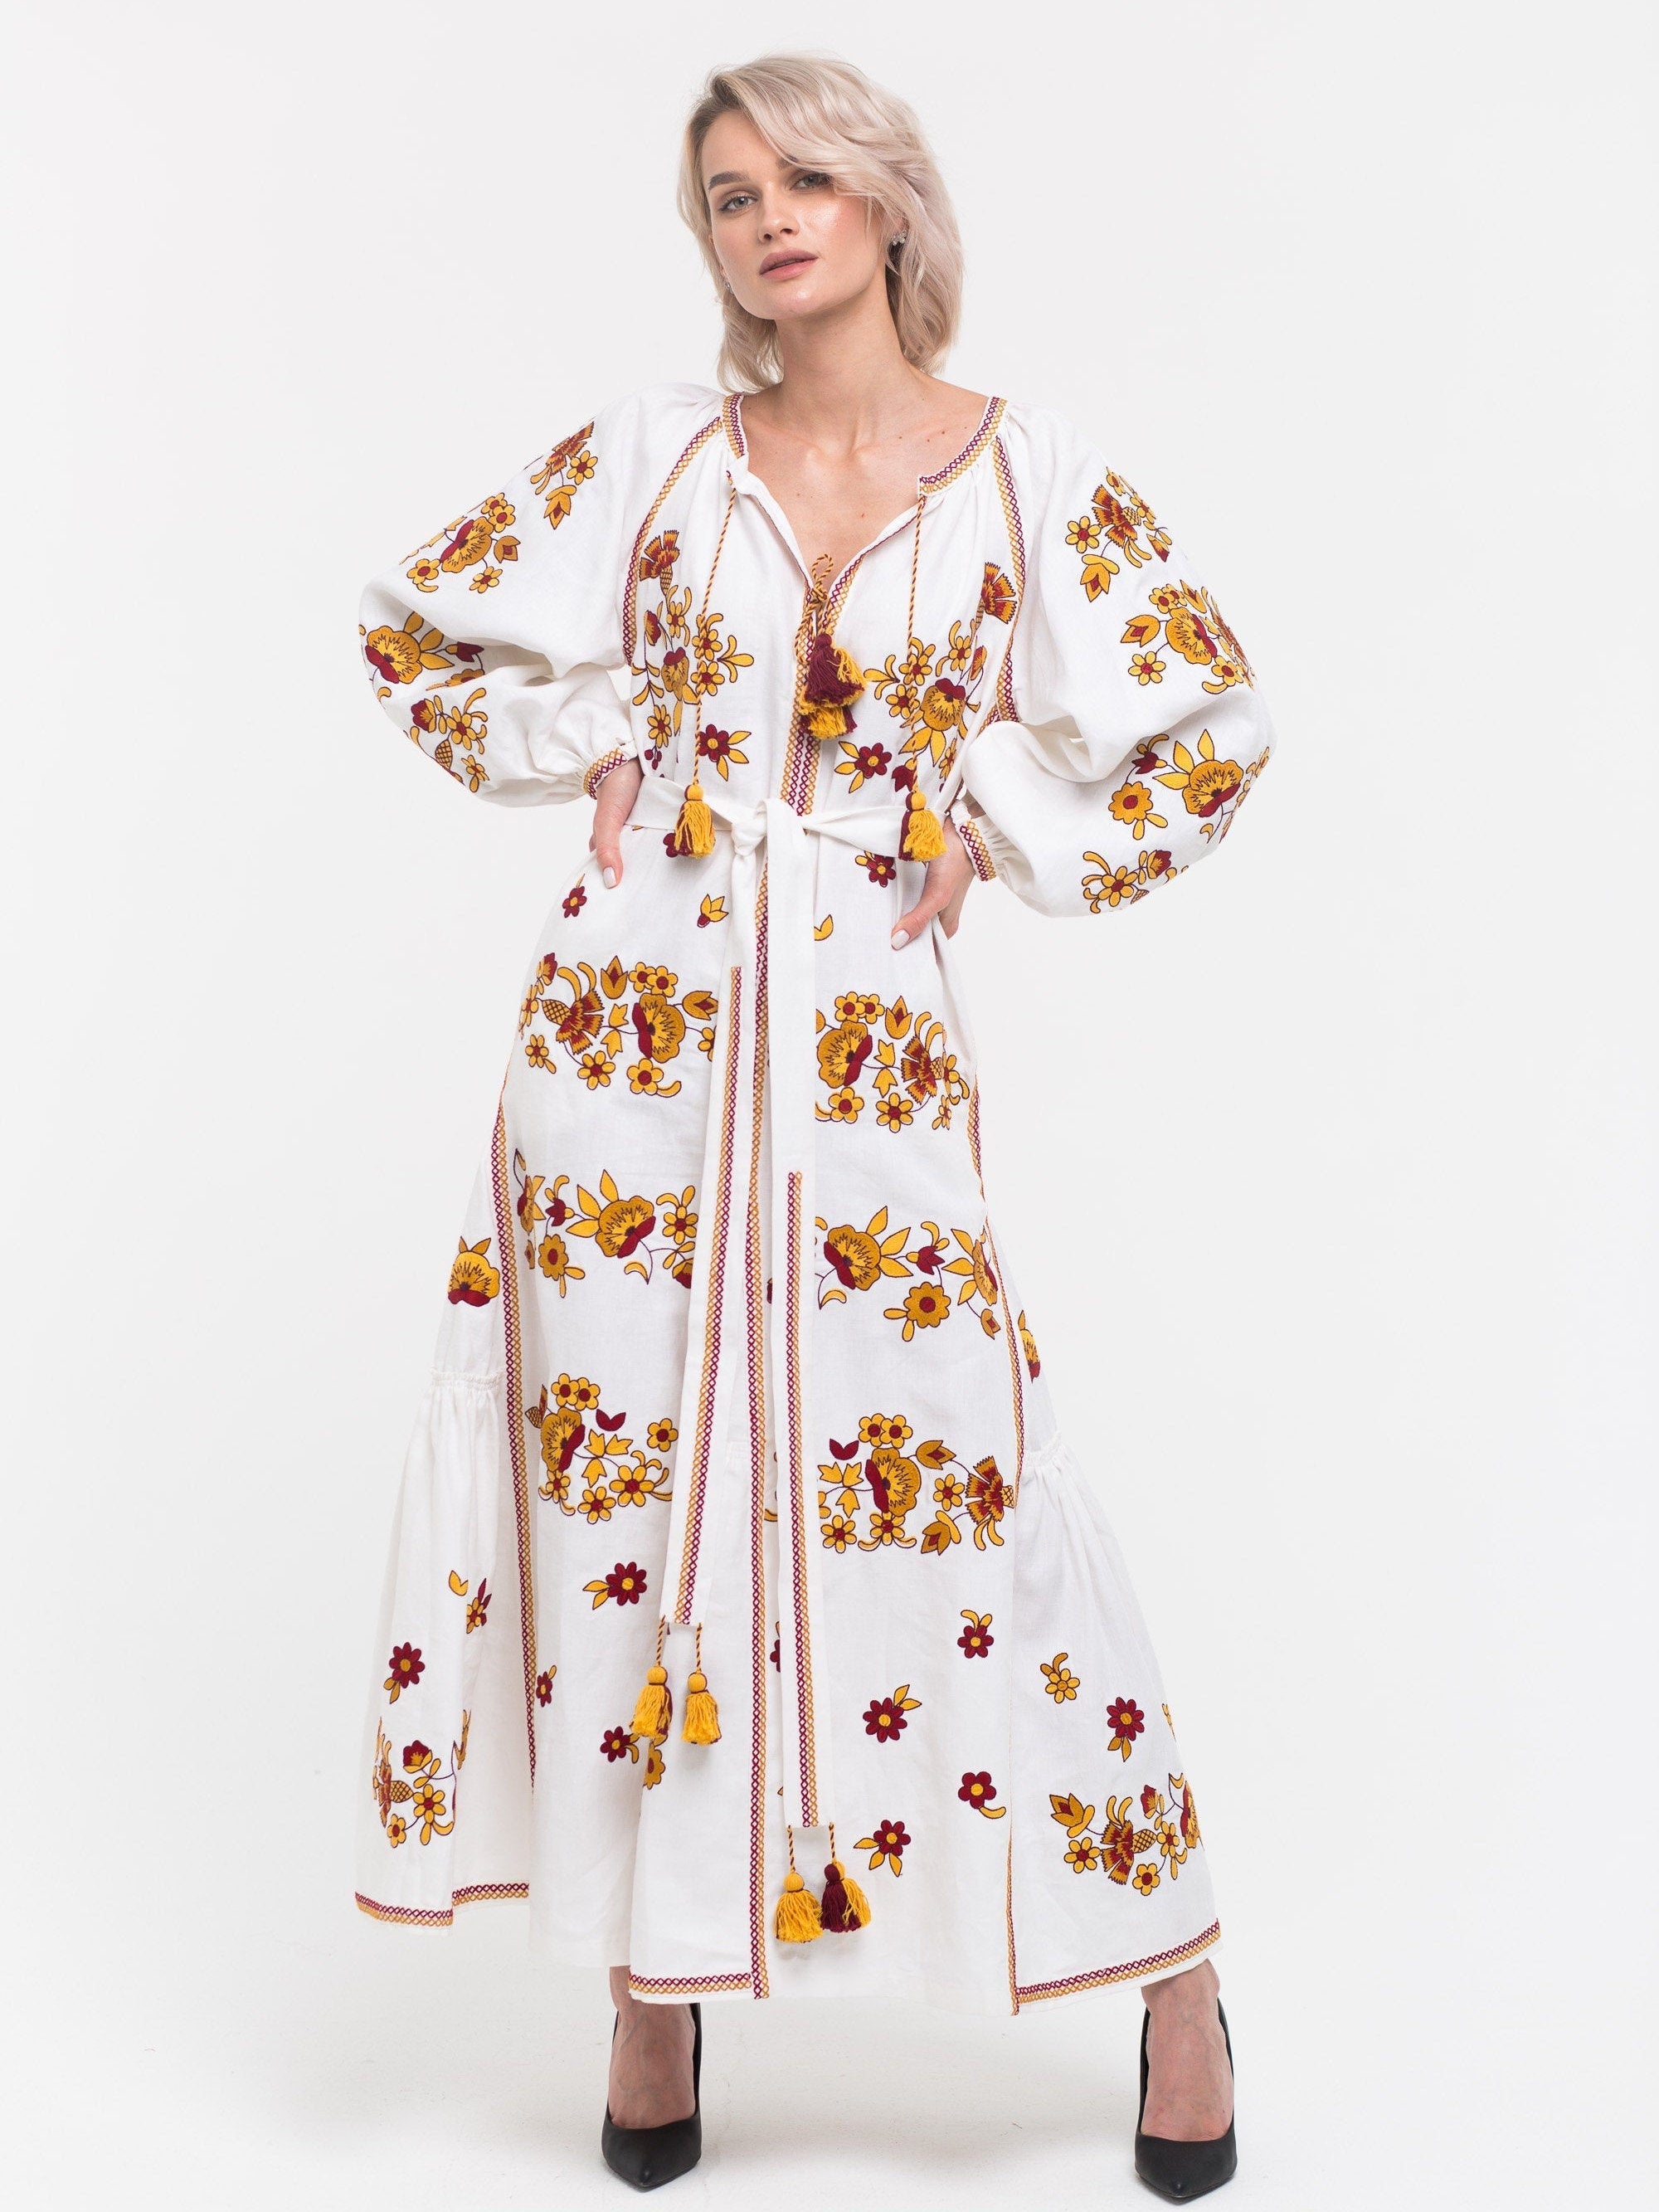 Fashion embroidered floral dress boho Mermaid ukrainian wedding dress plus size Bohemian outfit for women